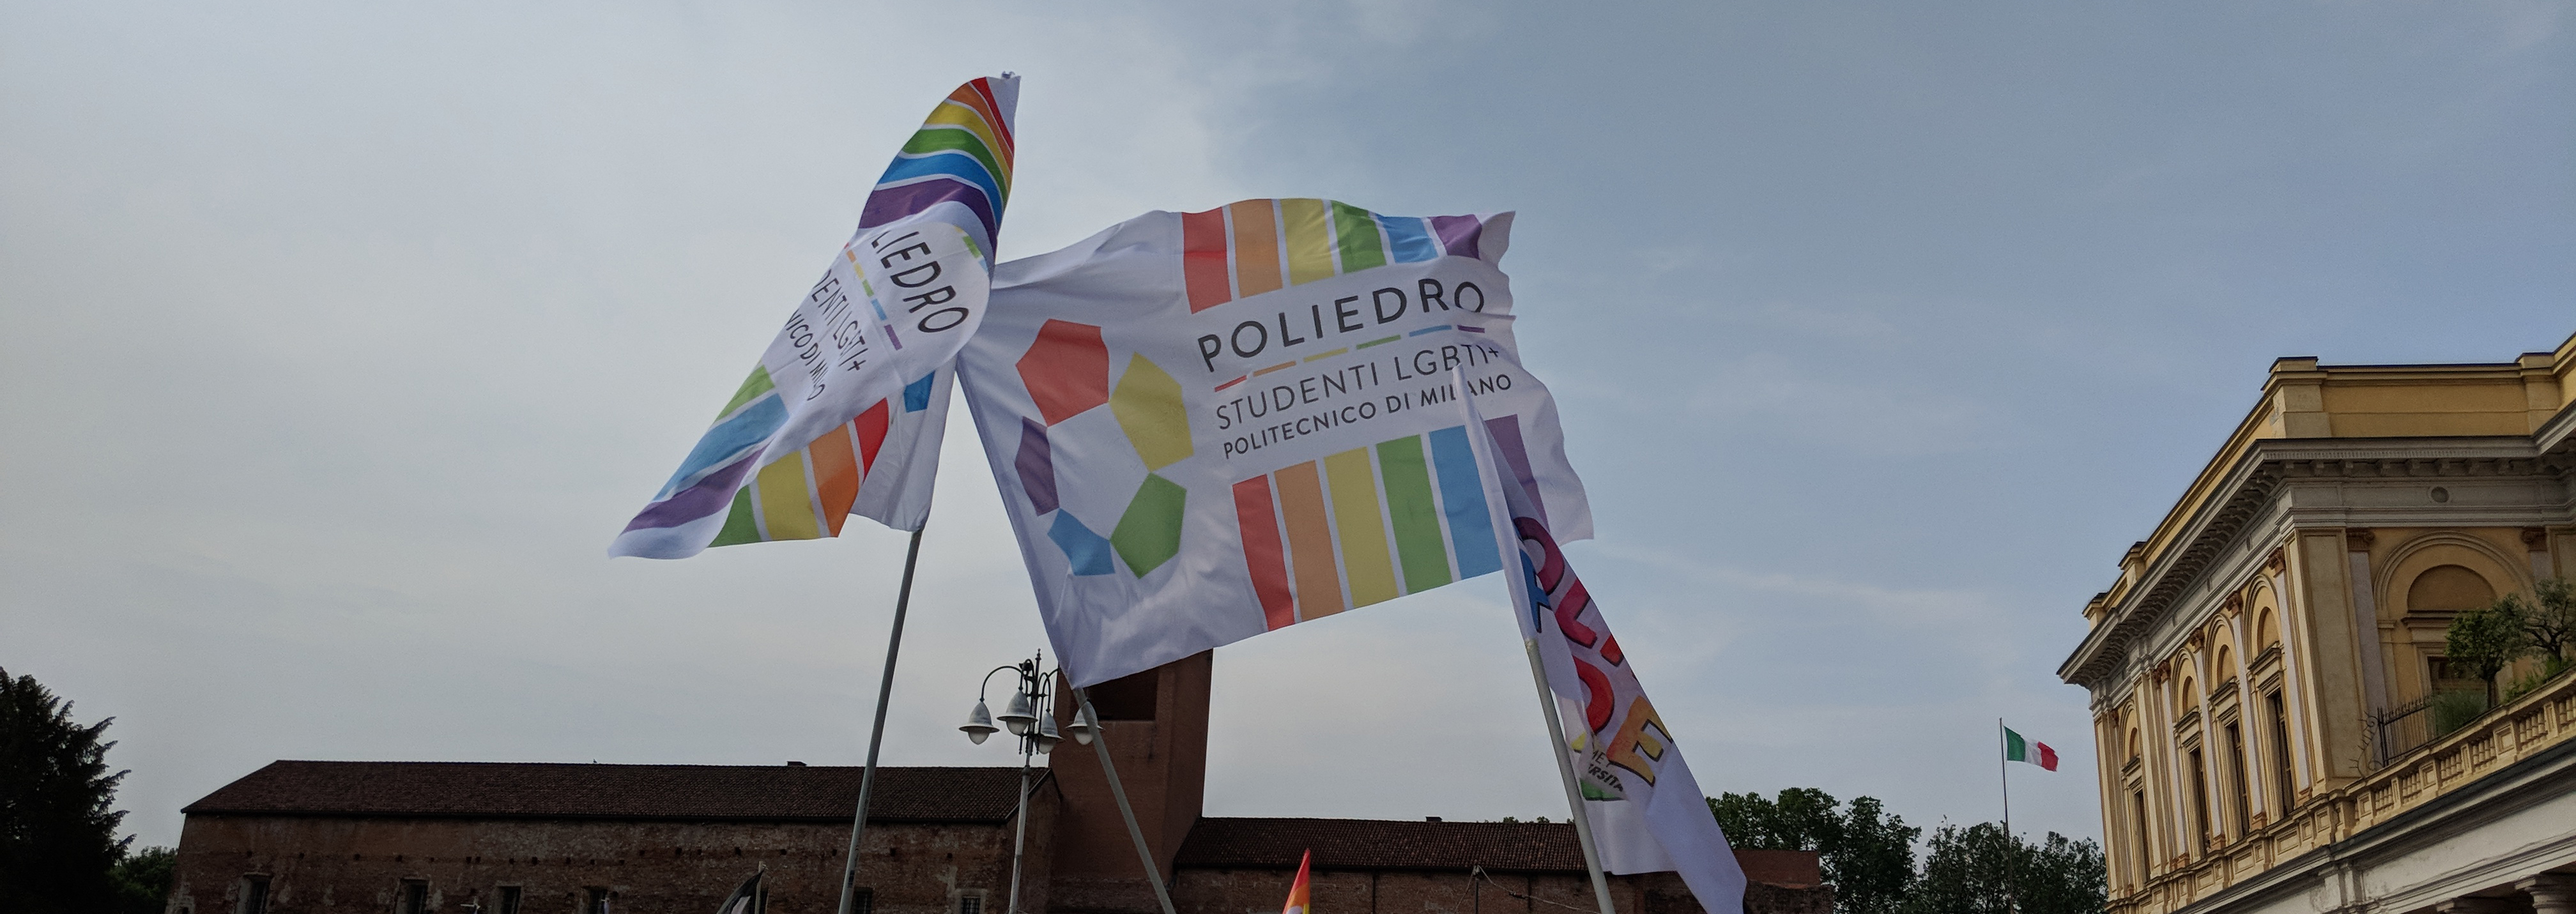 PoliEdro flag during a Pride Parade